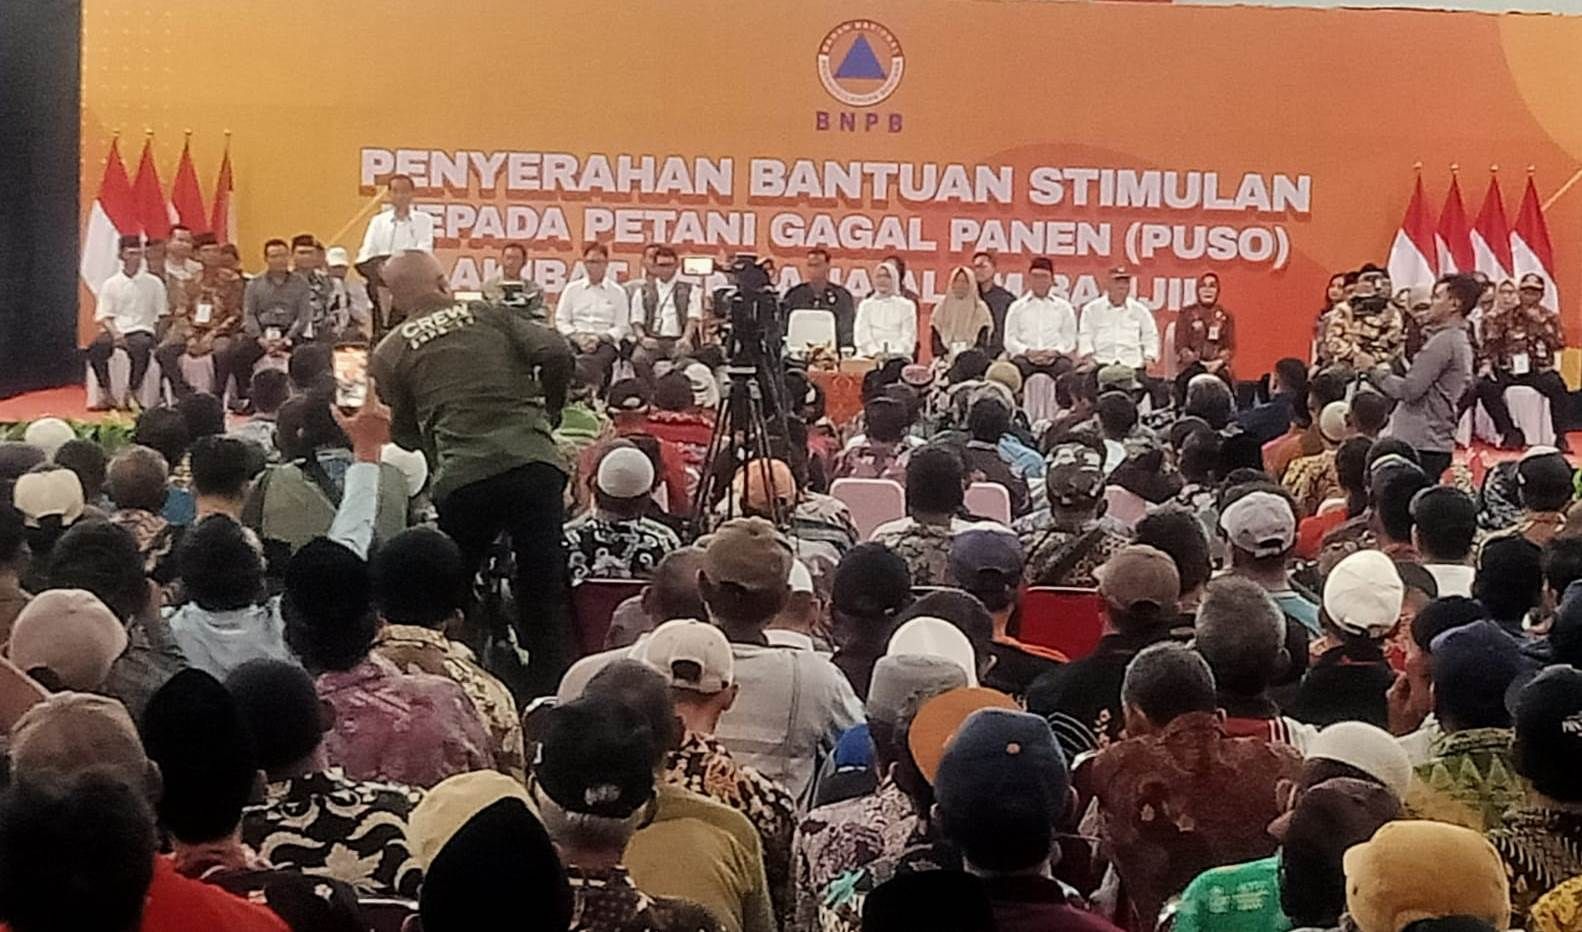 Suasana di GOR Bung Karno saat Presiden Jokowi memberikan sambutannya di acara penyerahan bantuan stimulan pada petani gagal panen atau puso.